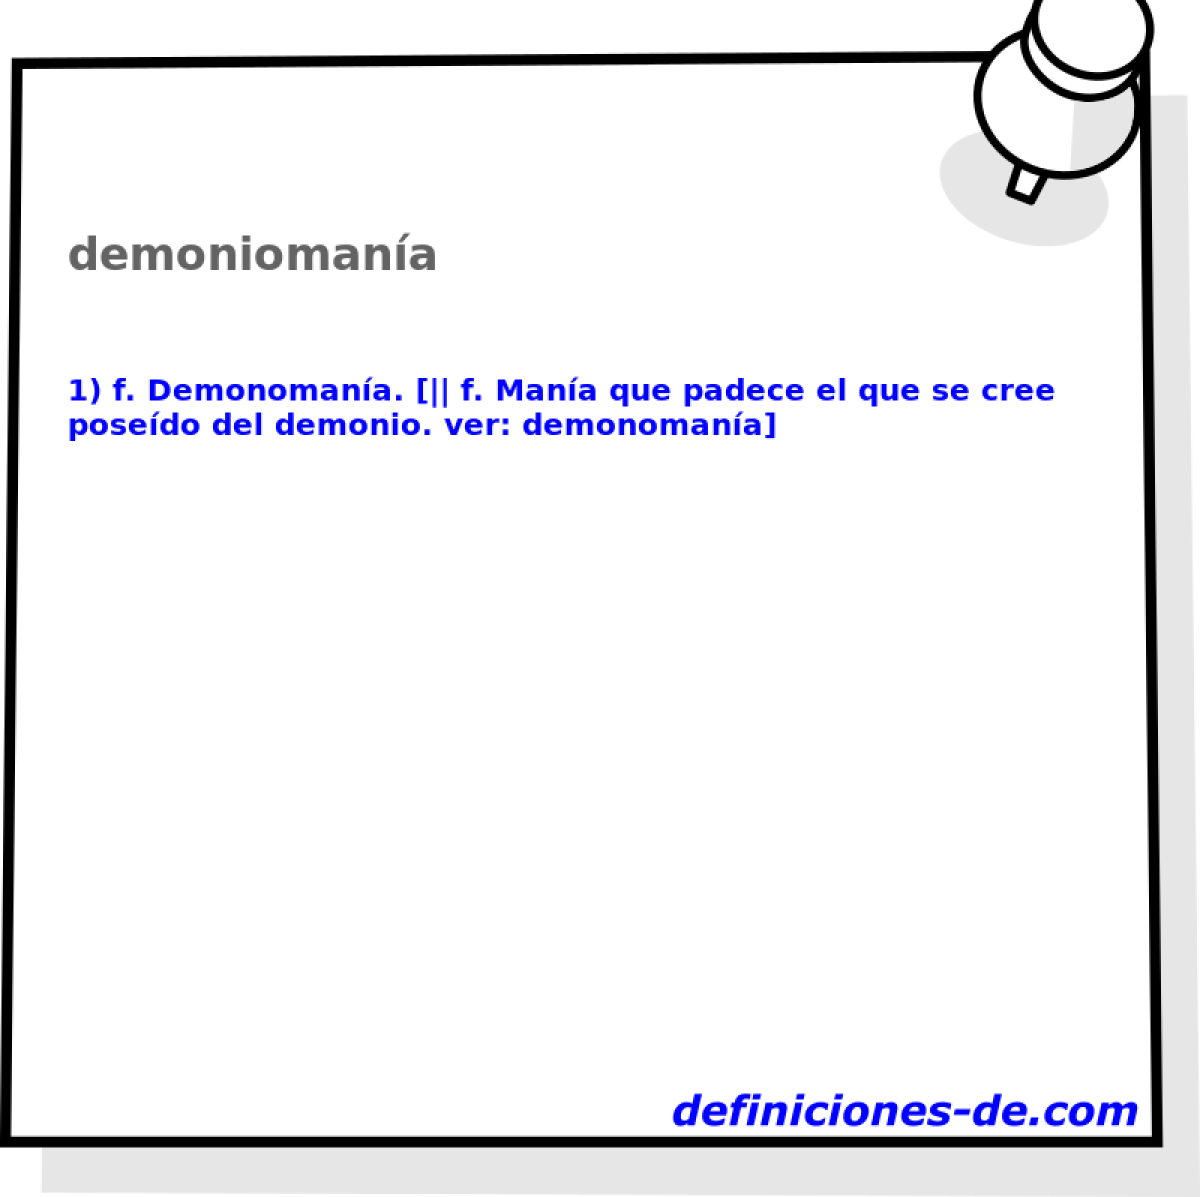 demoniomana 